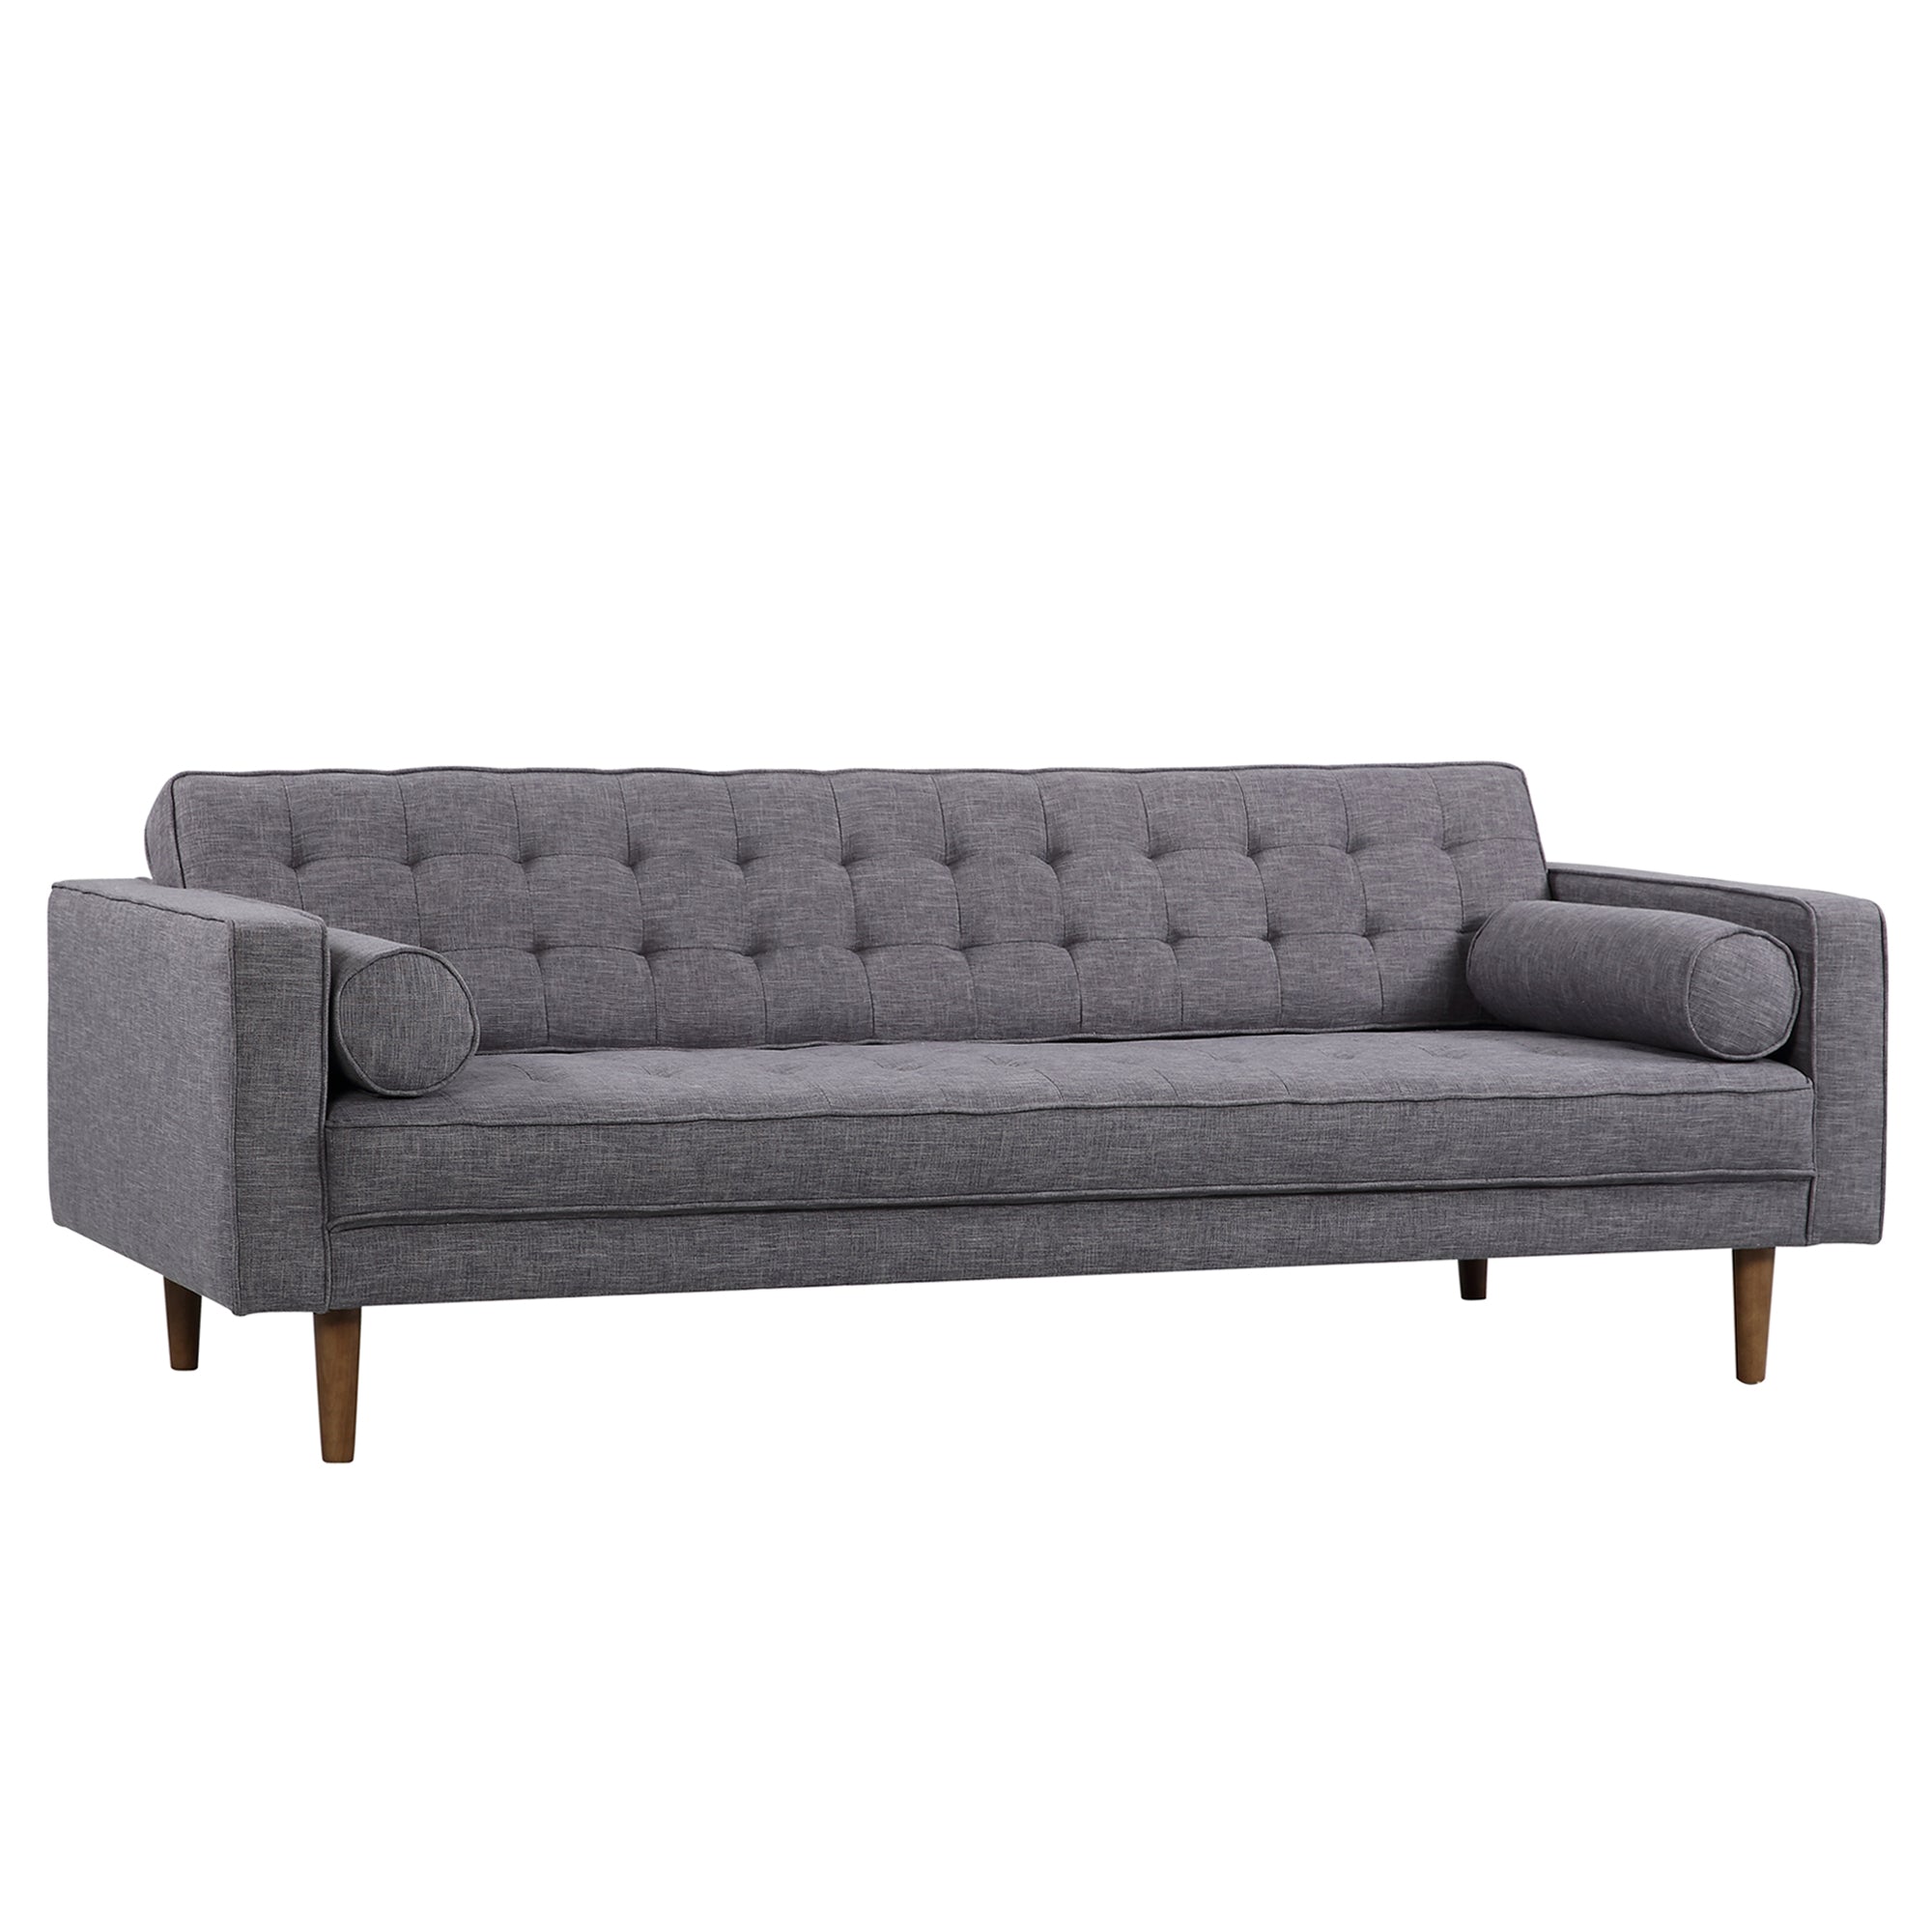 Armen Living Lcel3dg Element Mid-century Modern Sofa In Dark Gray Linen And Walnut Legs